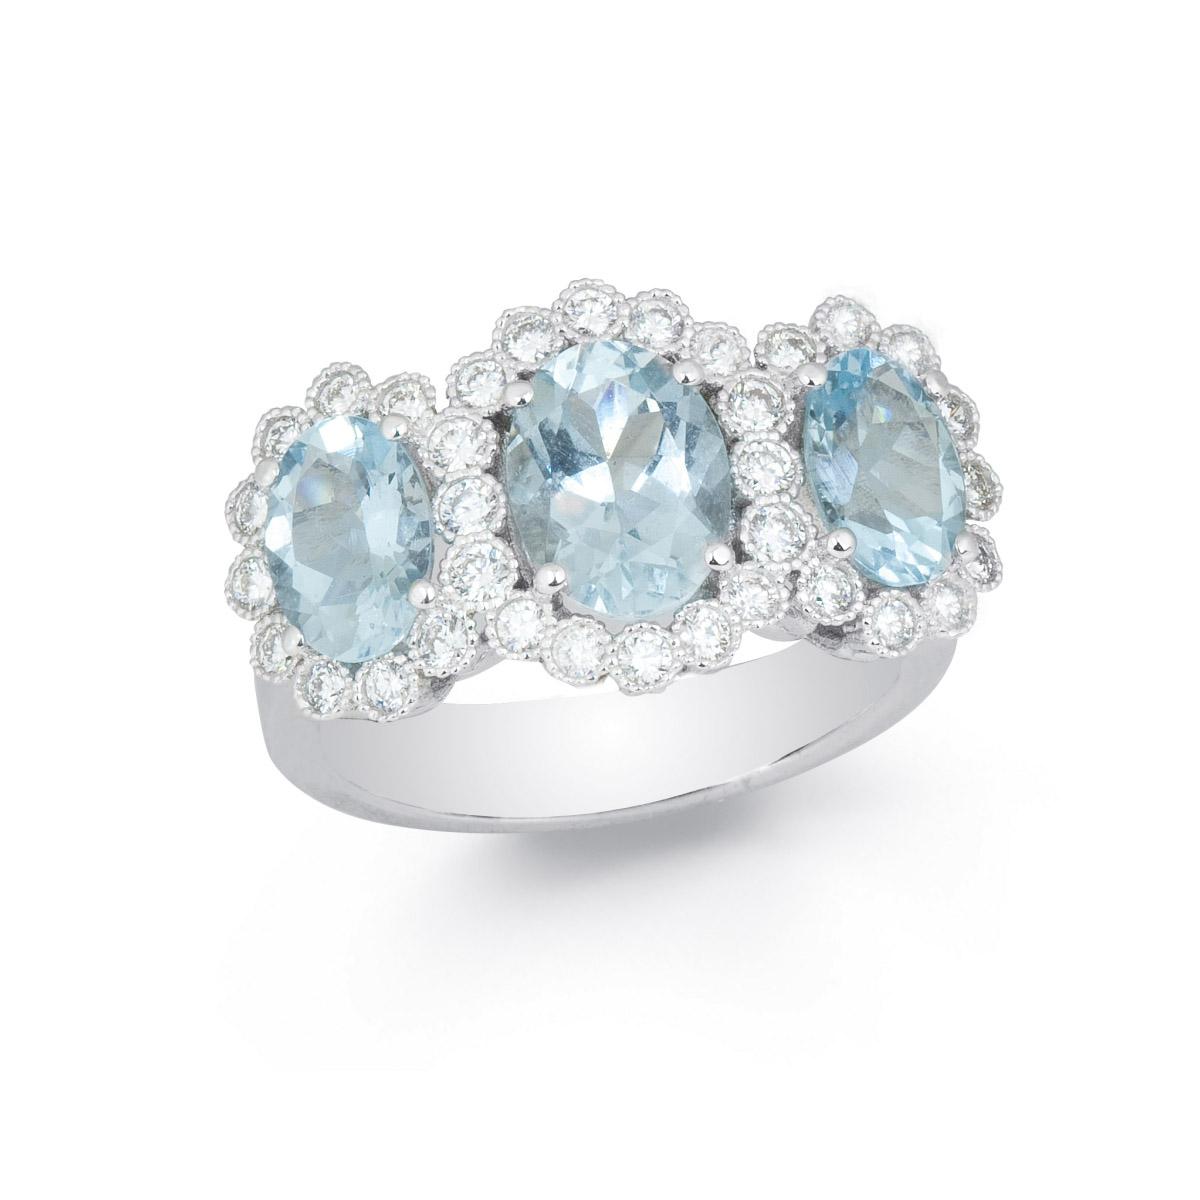 Gold ring with diamonds and aquamarine